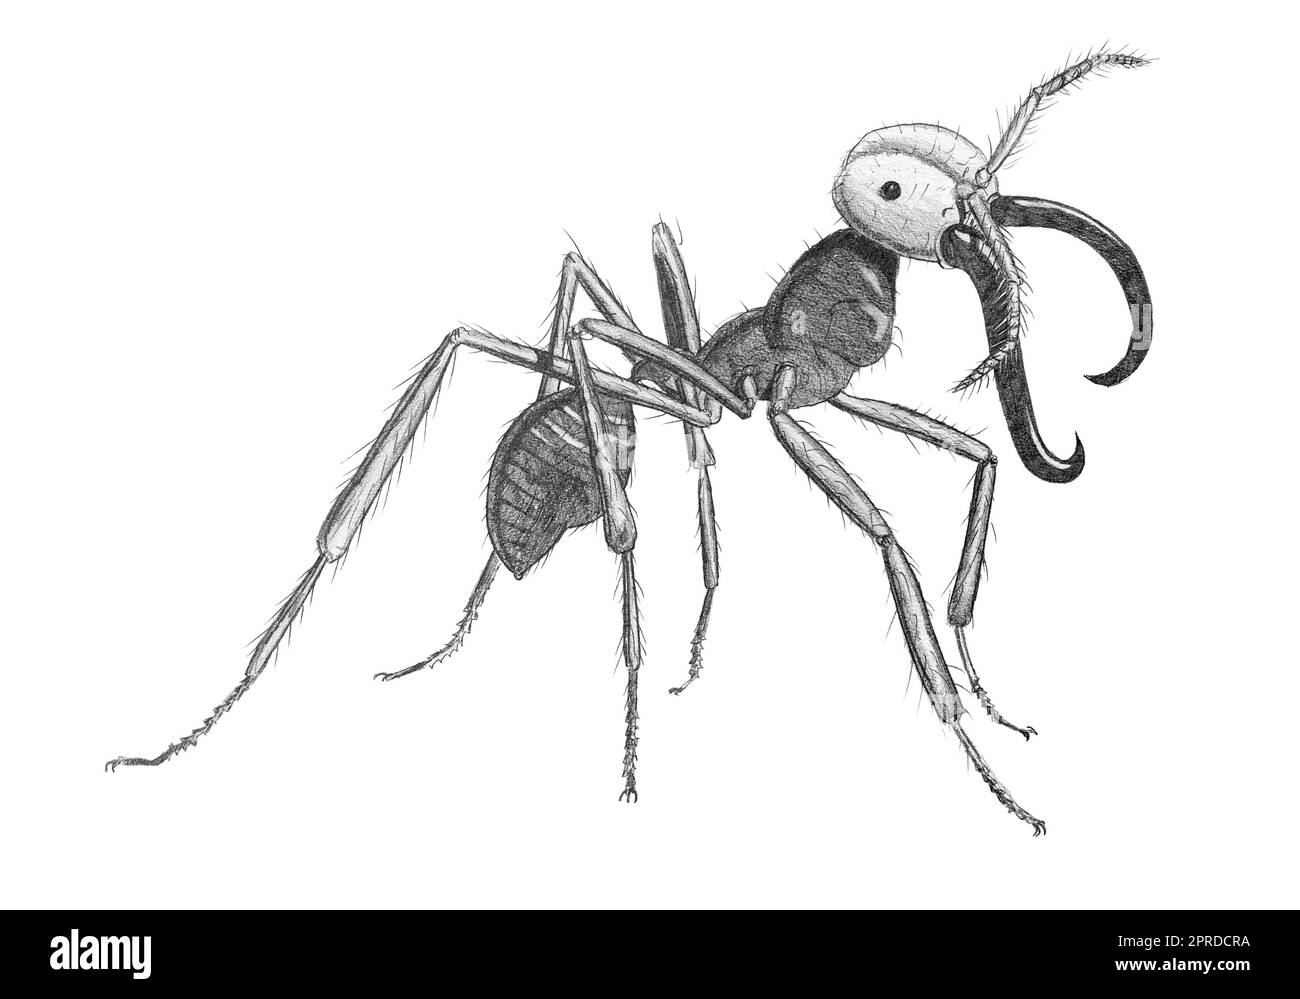 Army ant illustration Stock Photo